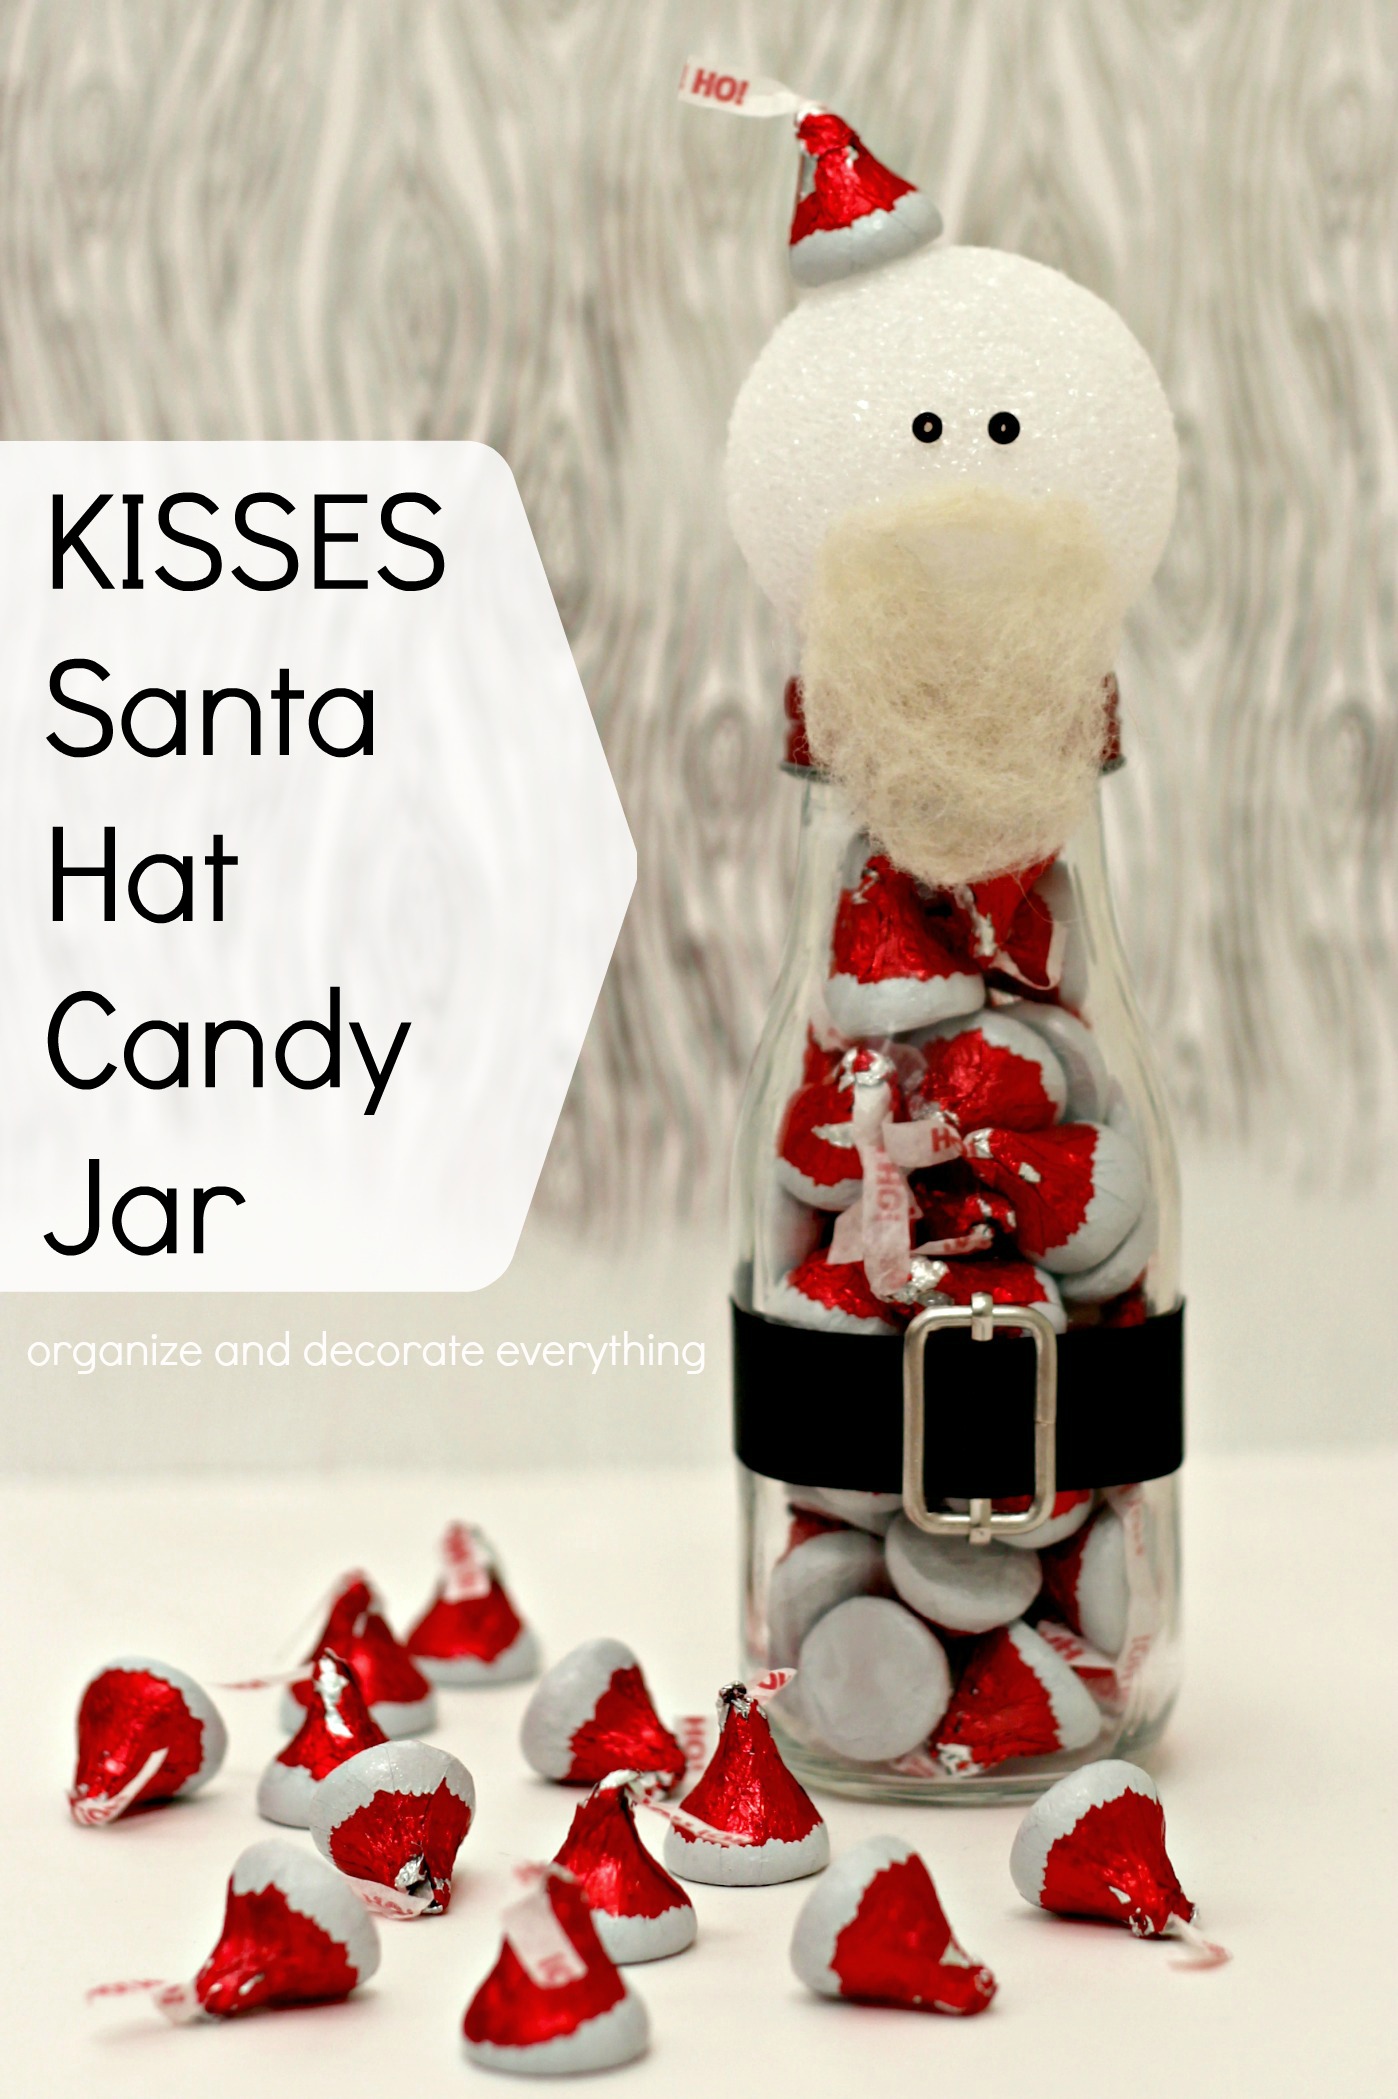 KISSES Santa Hat Candy Jars